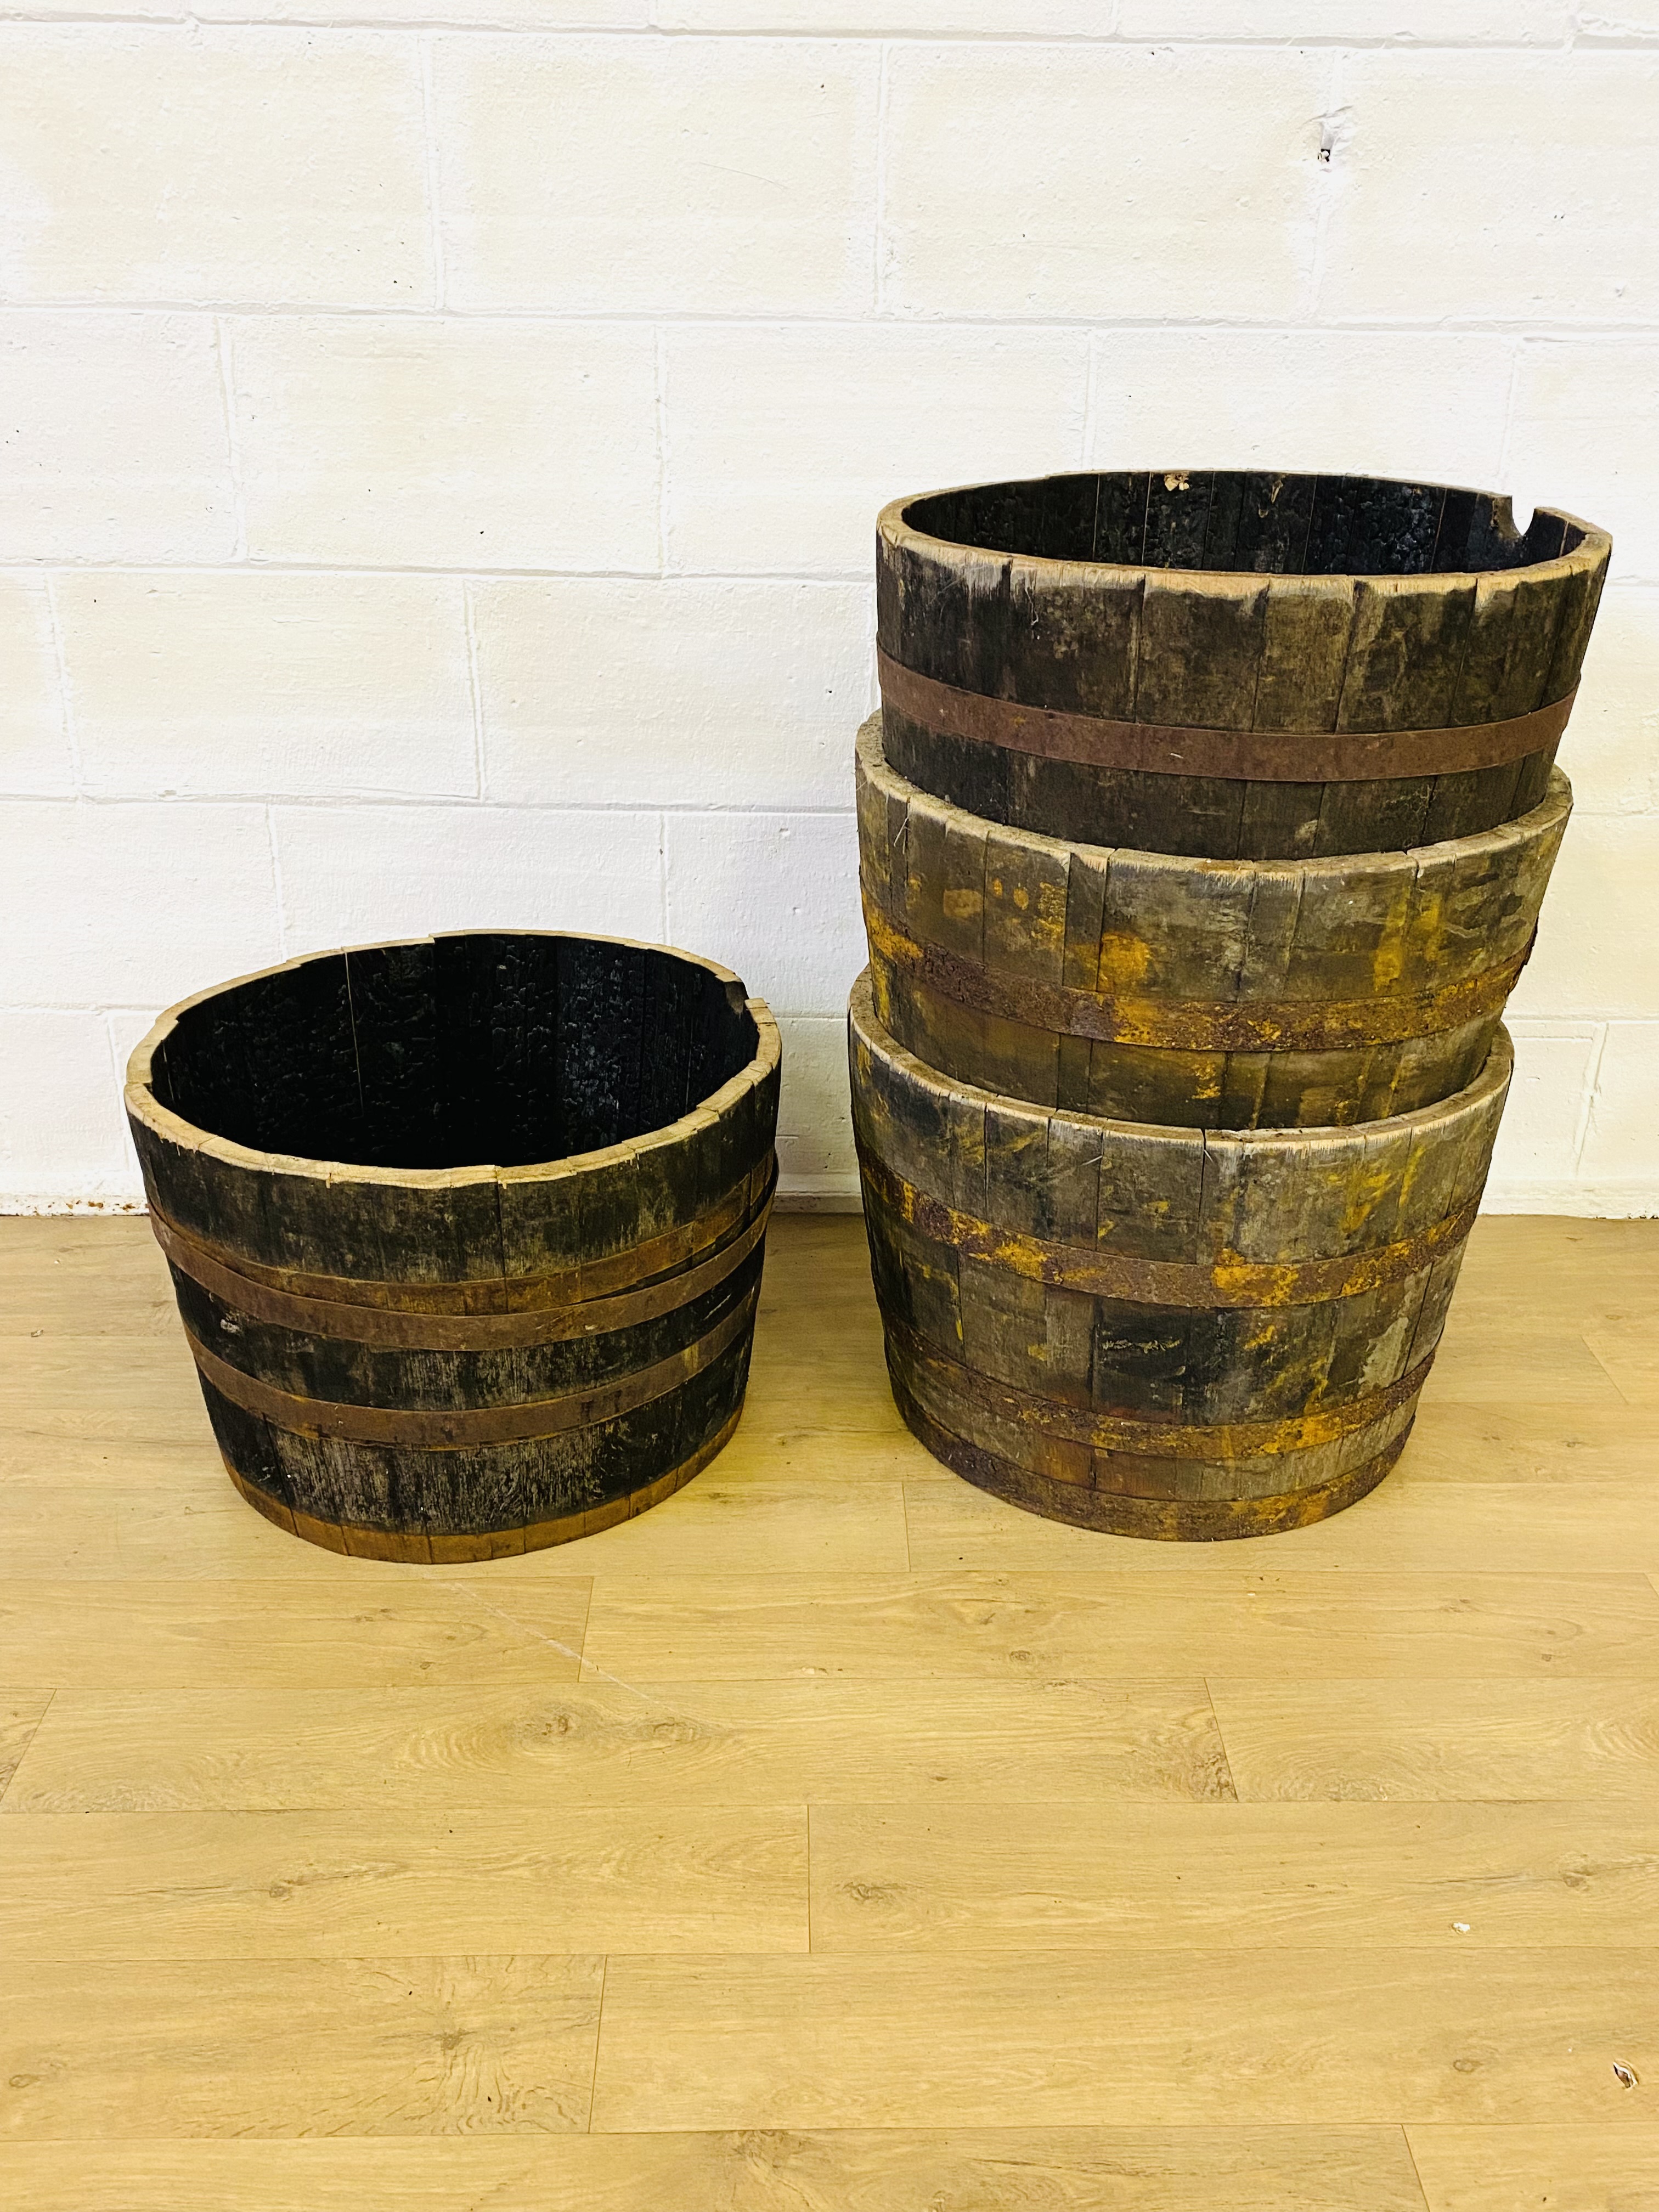 Four wood half barrels with metal bands